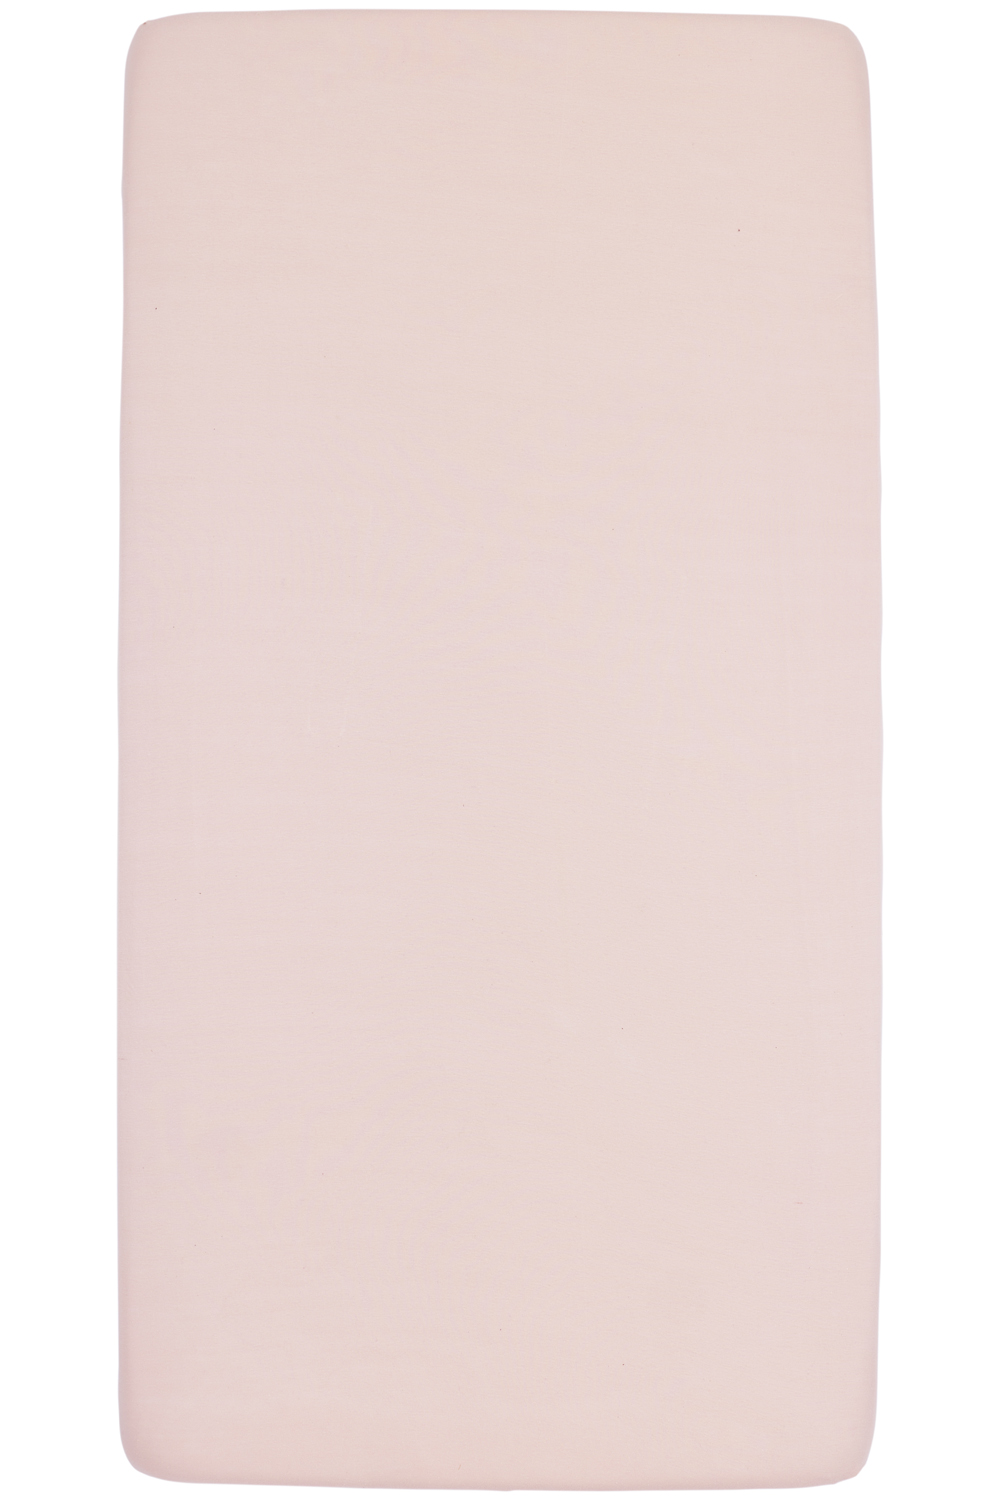 Fitted sheet crib Uni - soft pink - 40x80/90cm